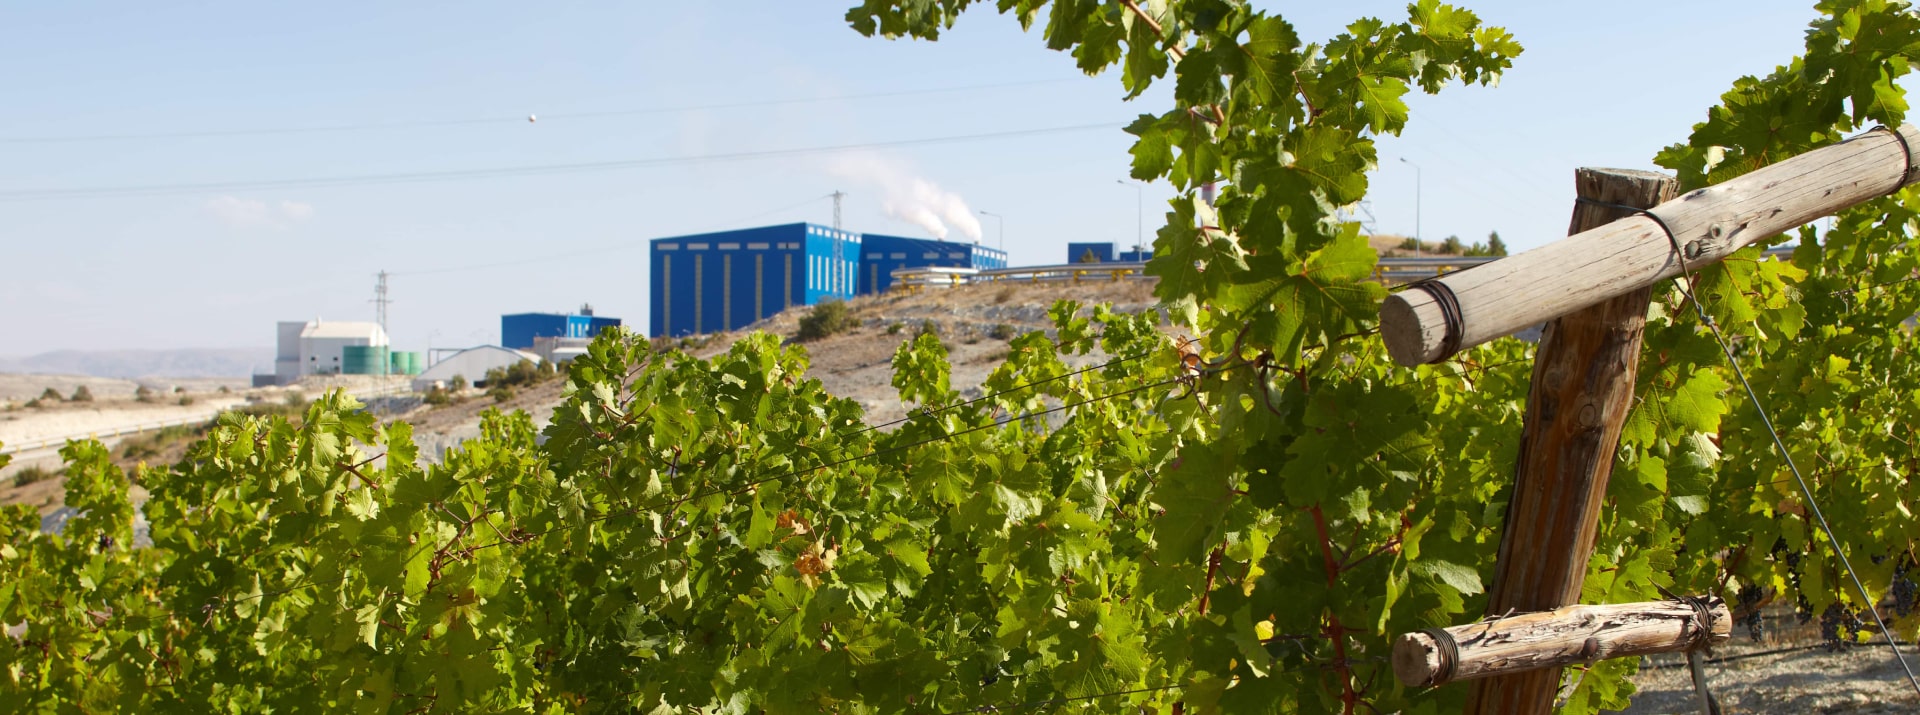 Eti Soda vineyards hills landscape factory